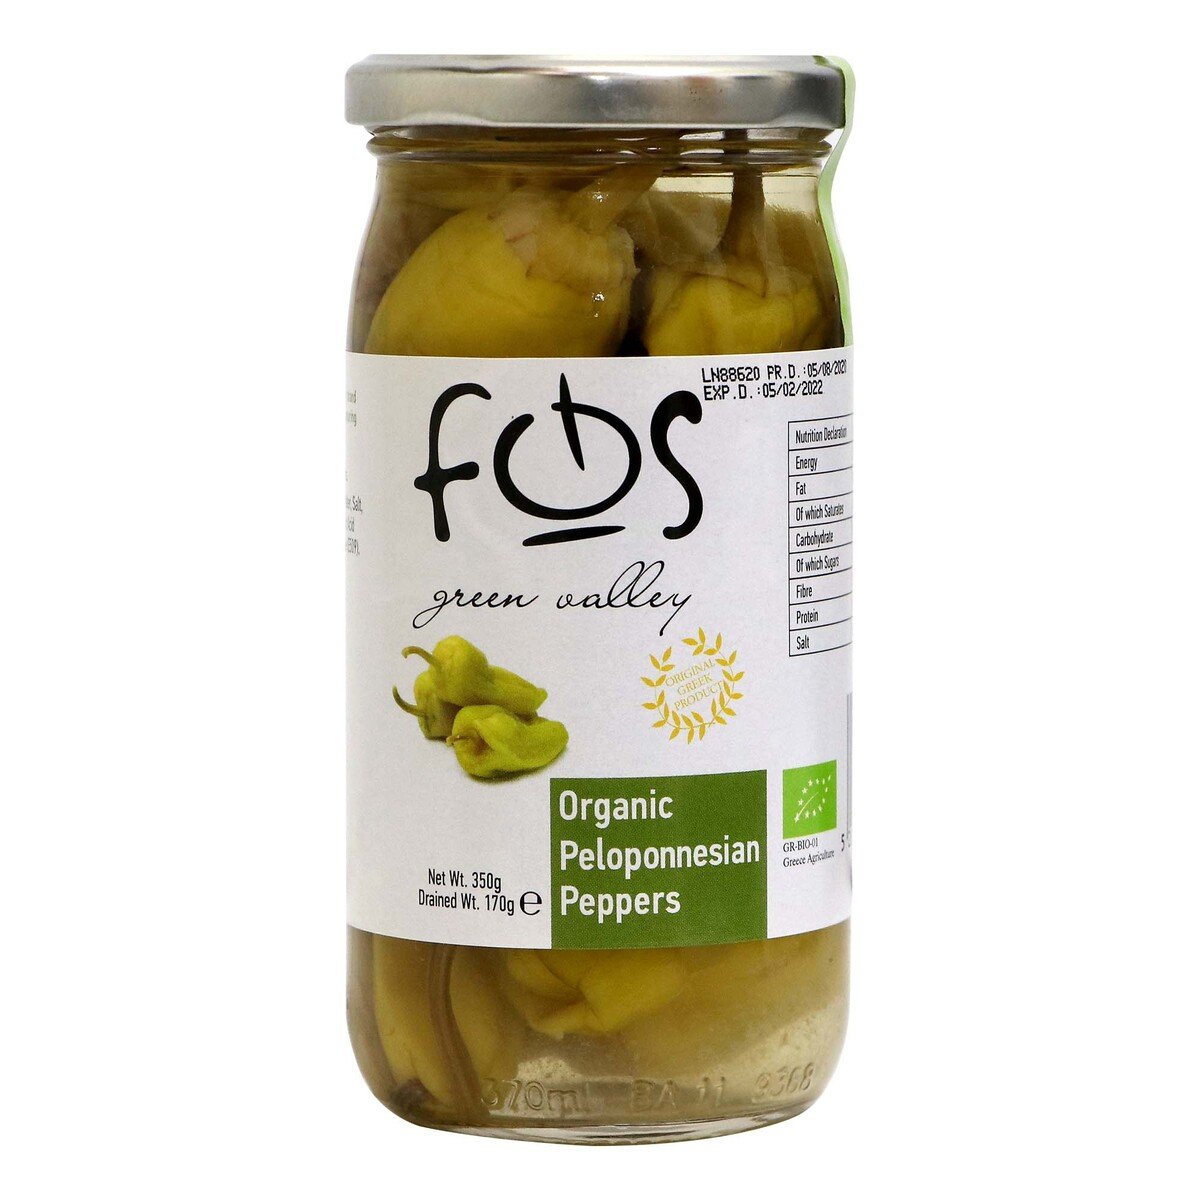 FQS Organic Peloponnesian Peppers 350g